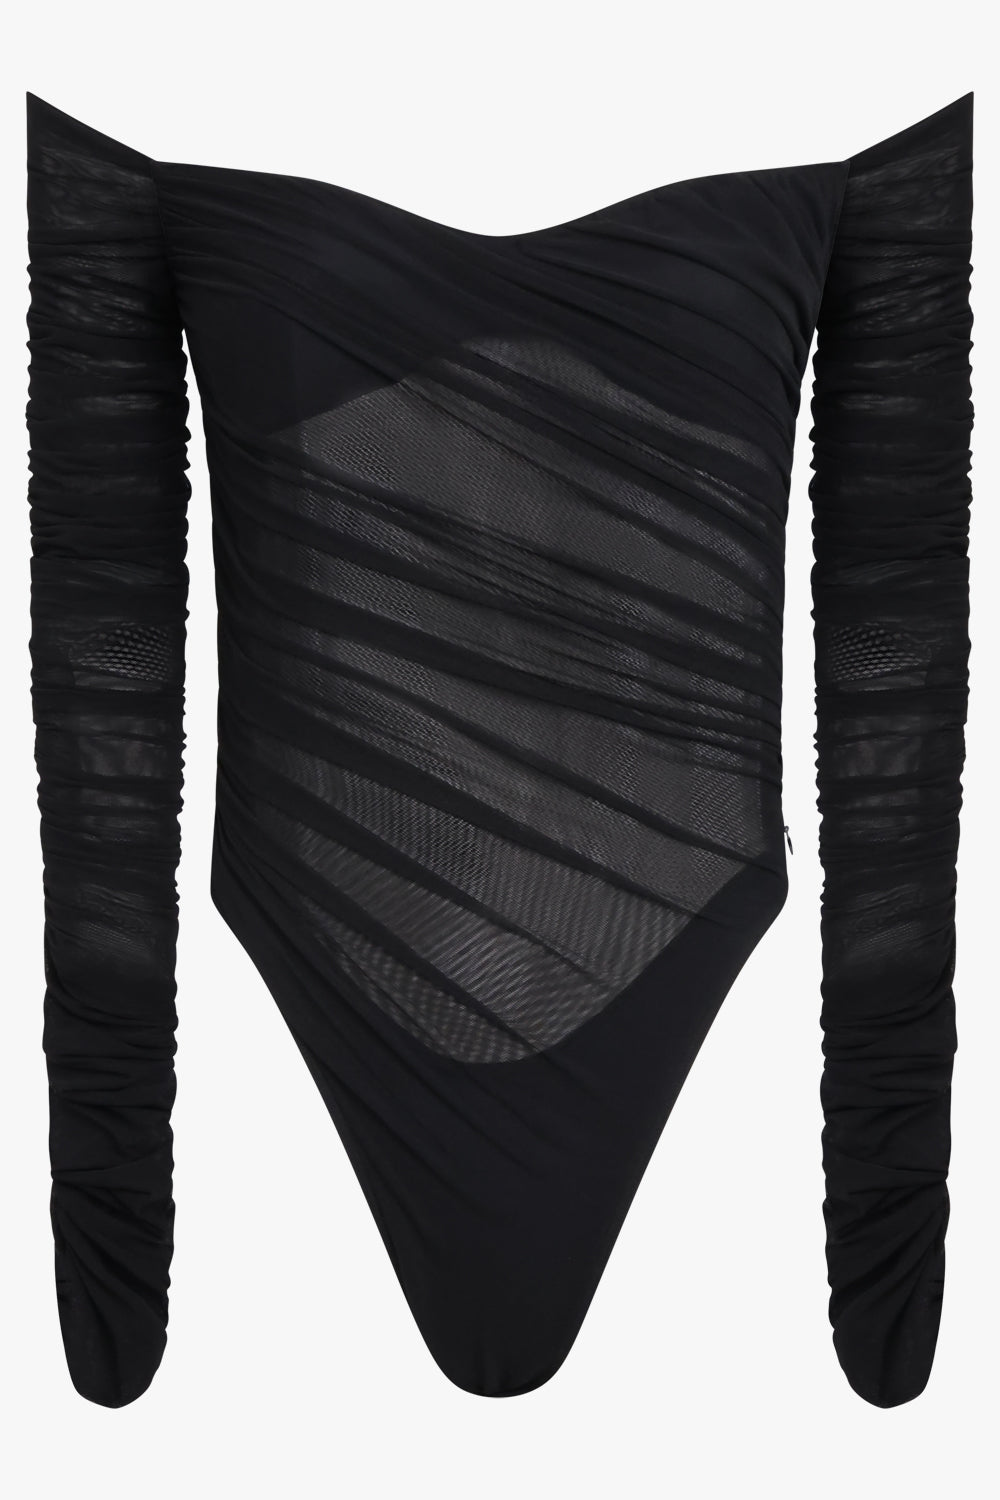 NEW Mugler x H&M Mesh-Paneled Bodysuit Brown/Black XL SOLD OUT RARE